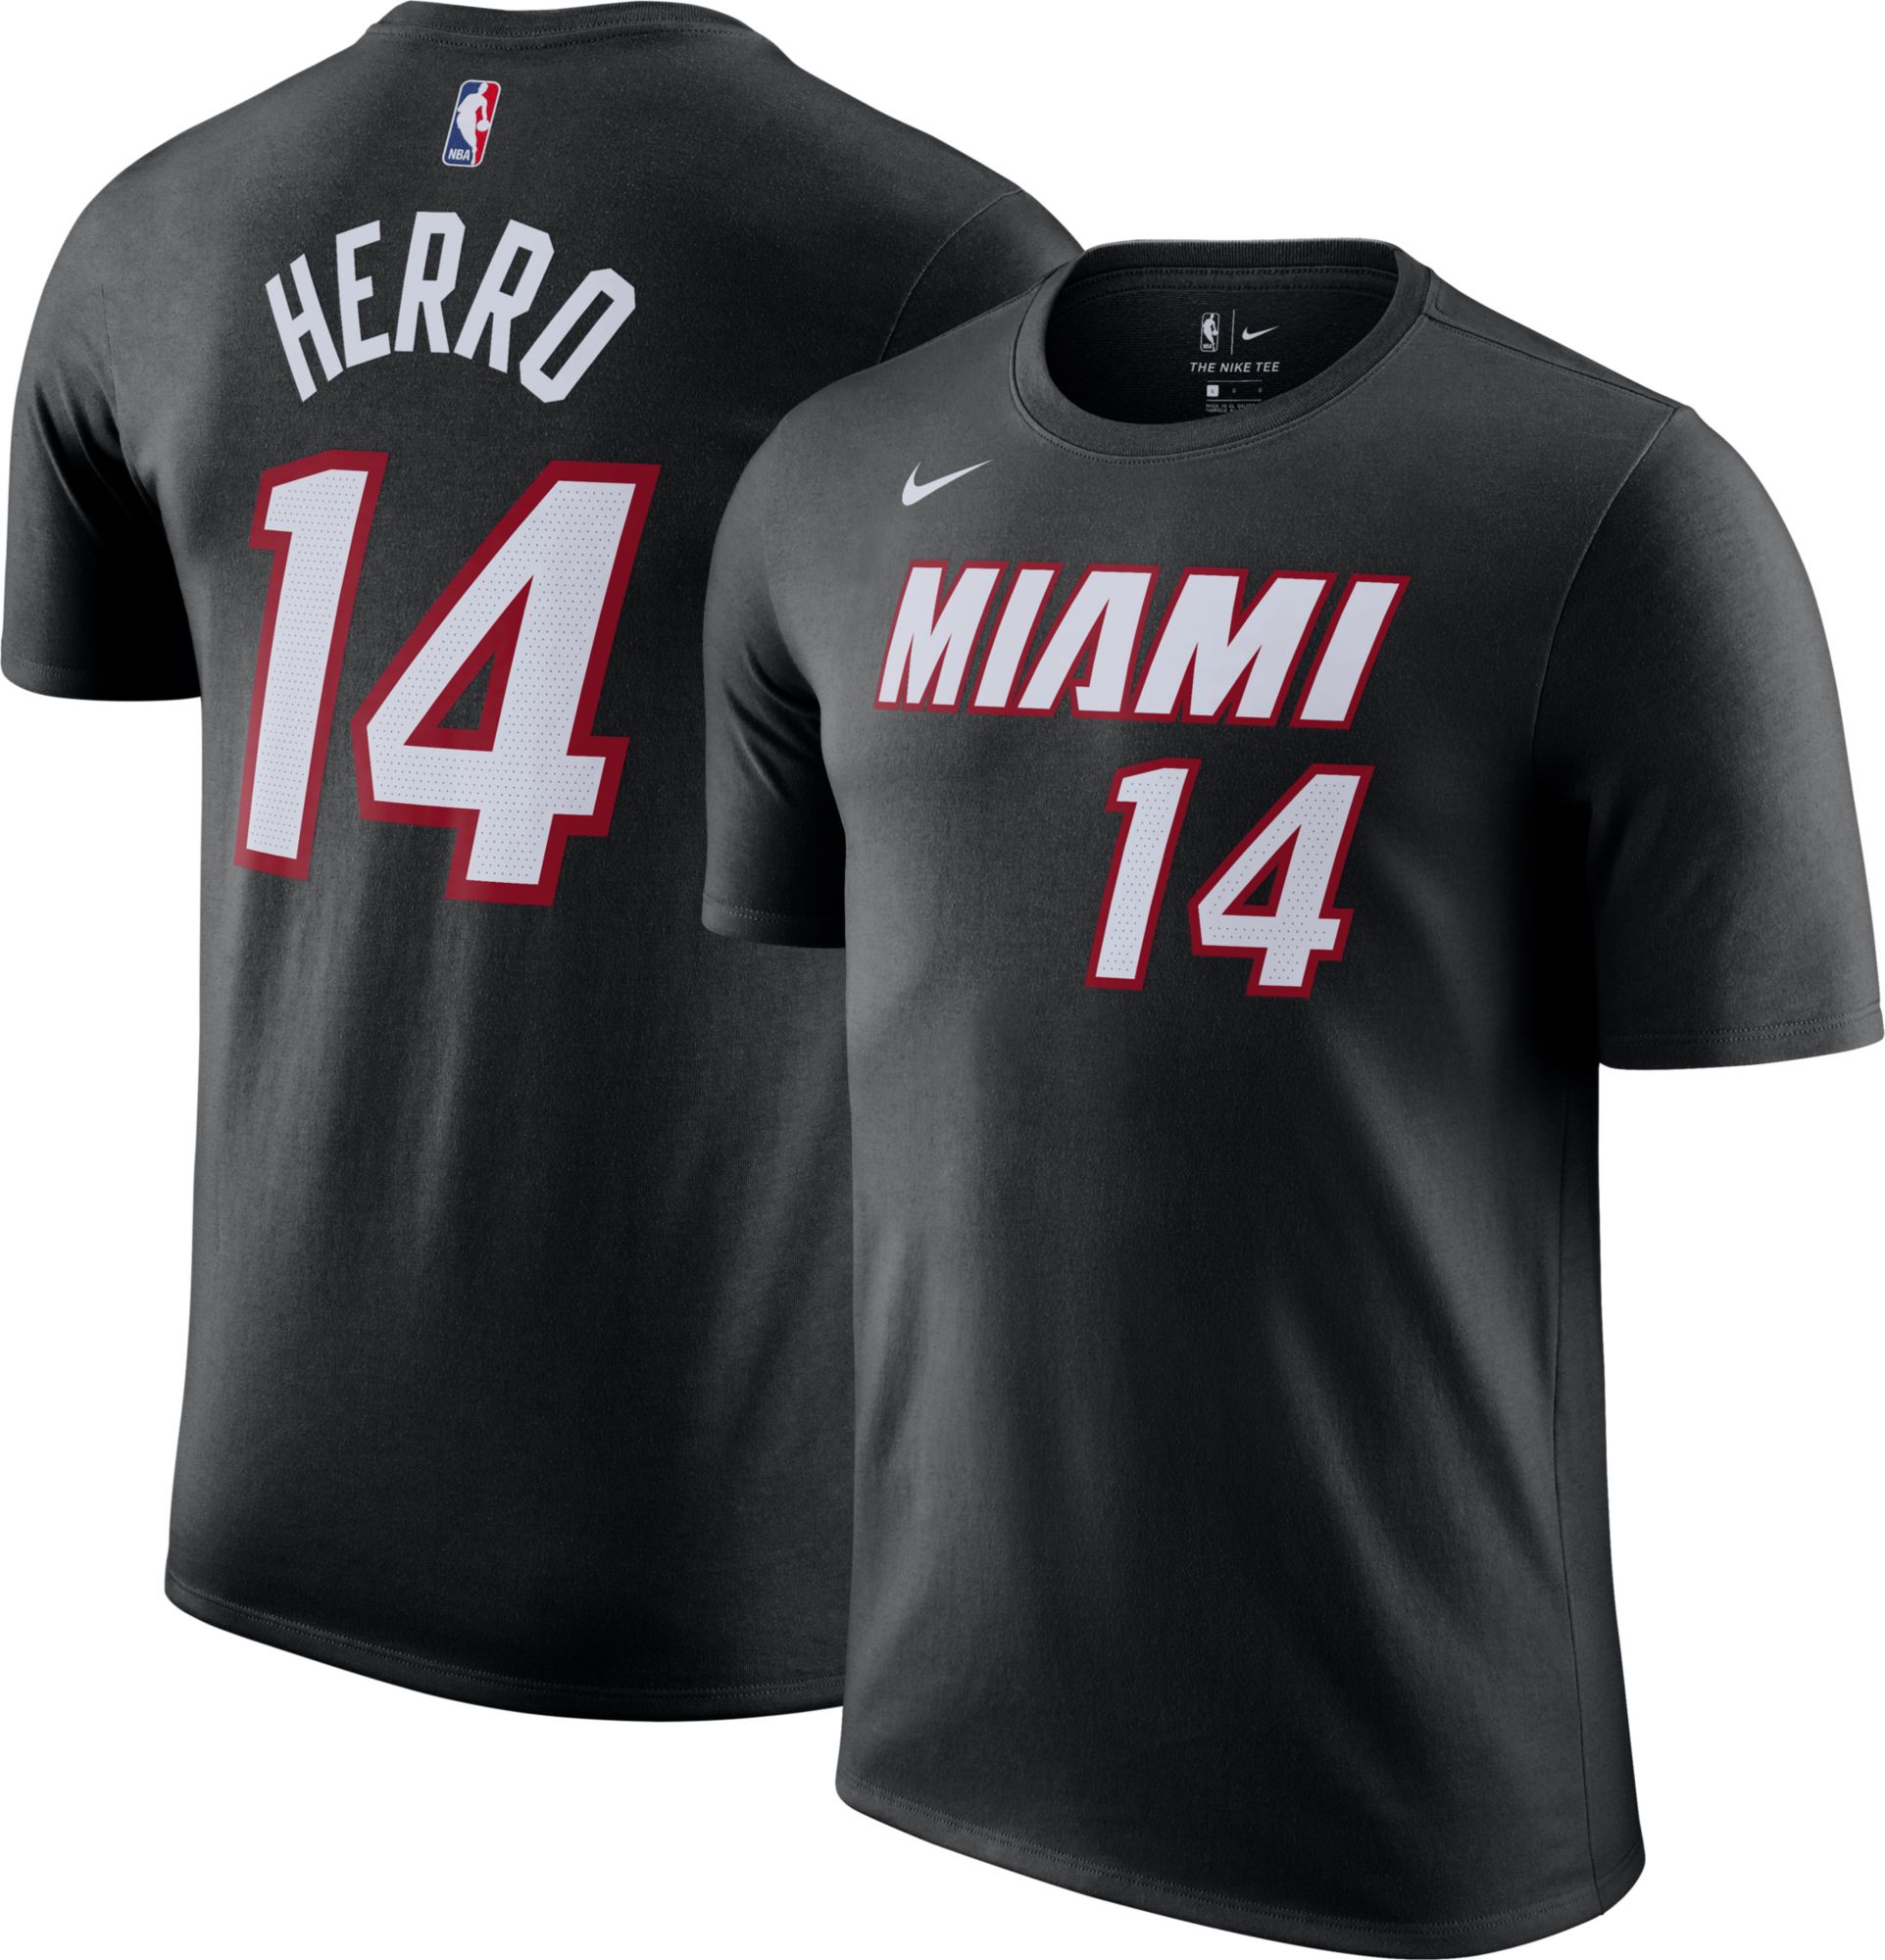 Nike / Men's 2021-22 City Edition Miami Heat Tyler Herro #14 Black